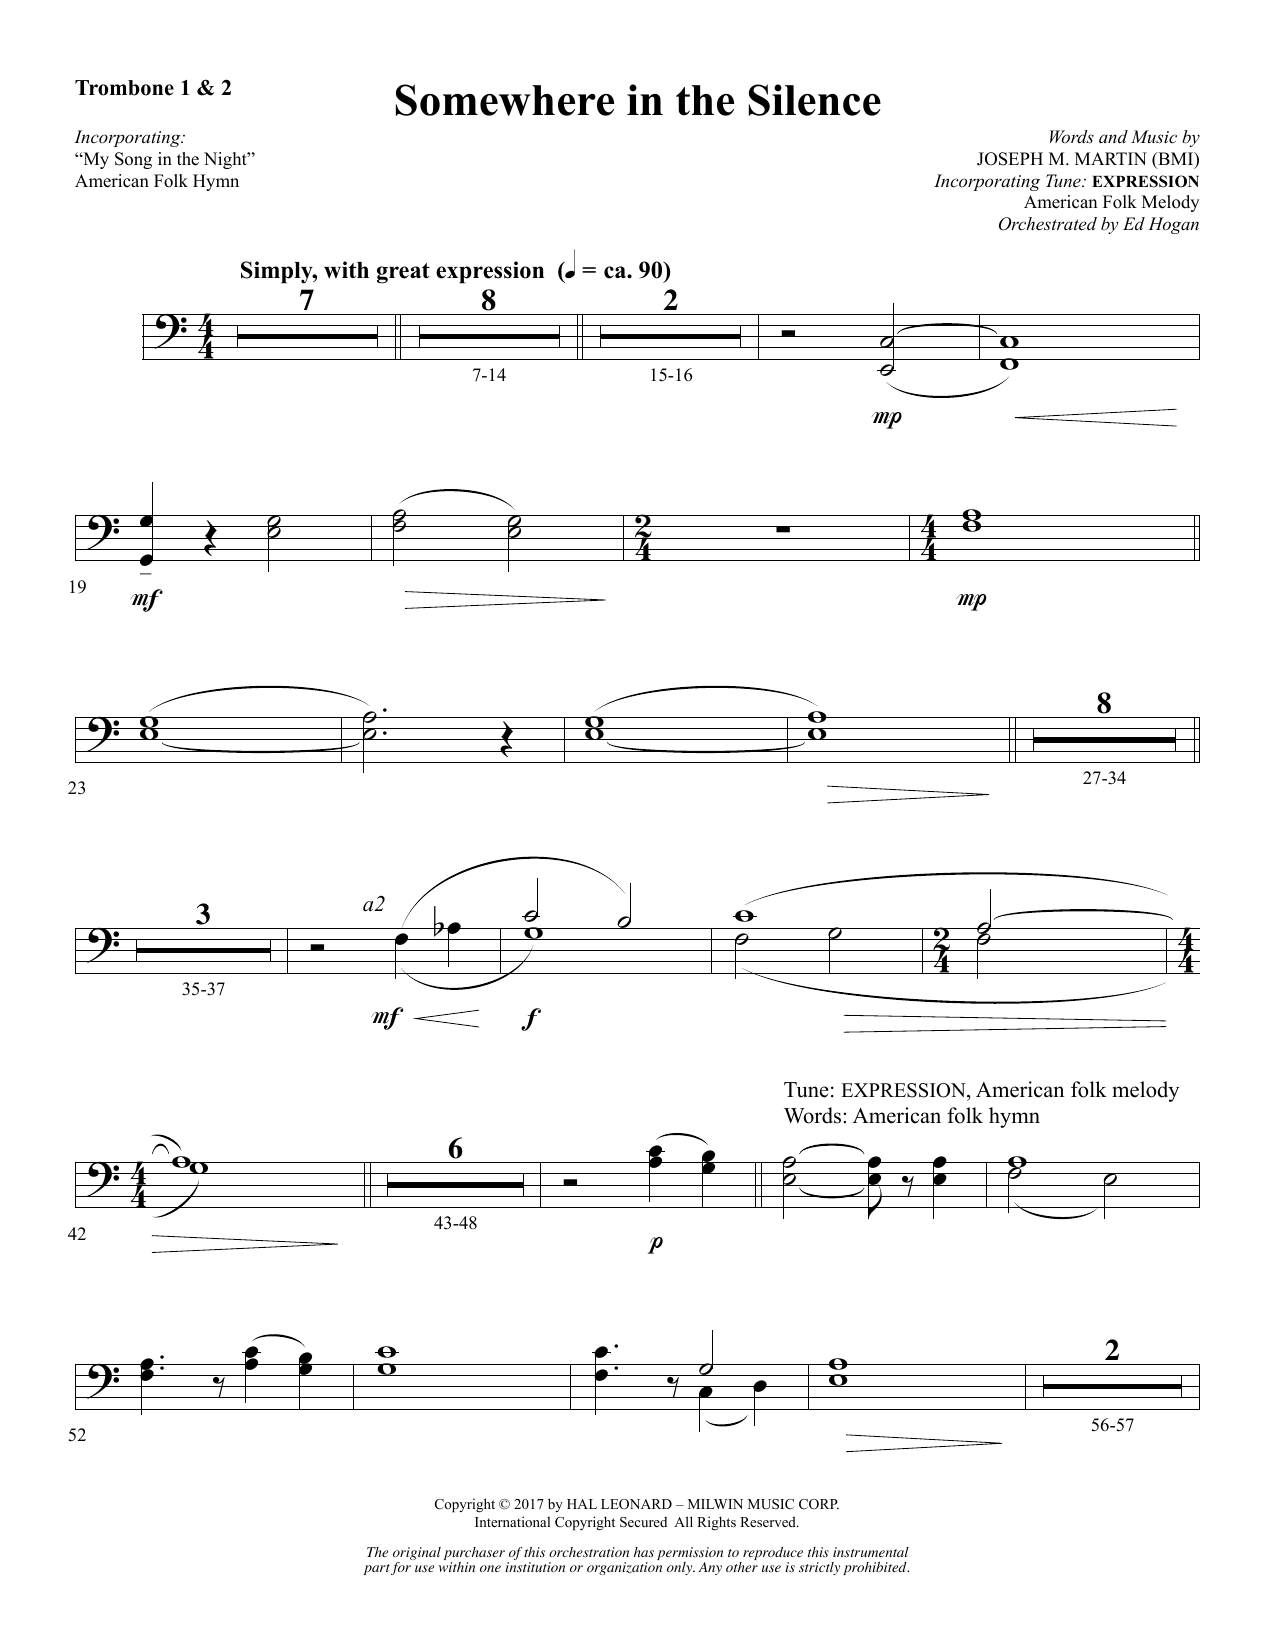 Download Joseph M. Martin Somewhere in the Silence - Trombone 1 & Sheet Music